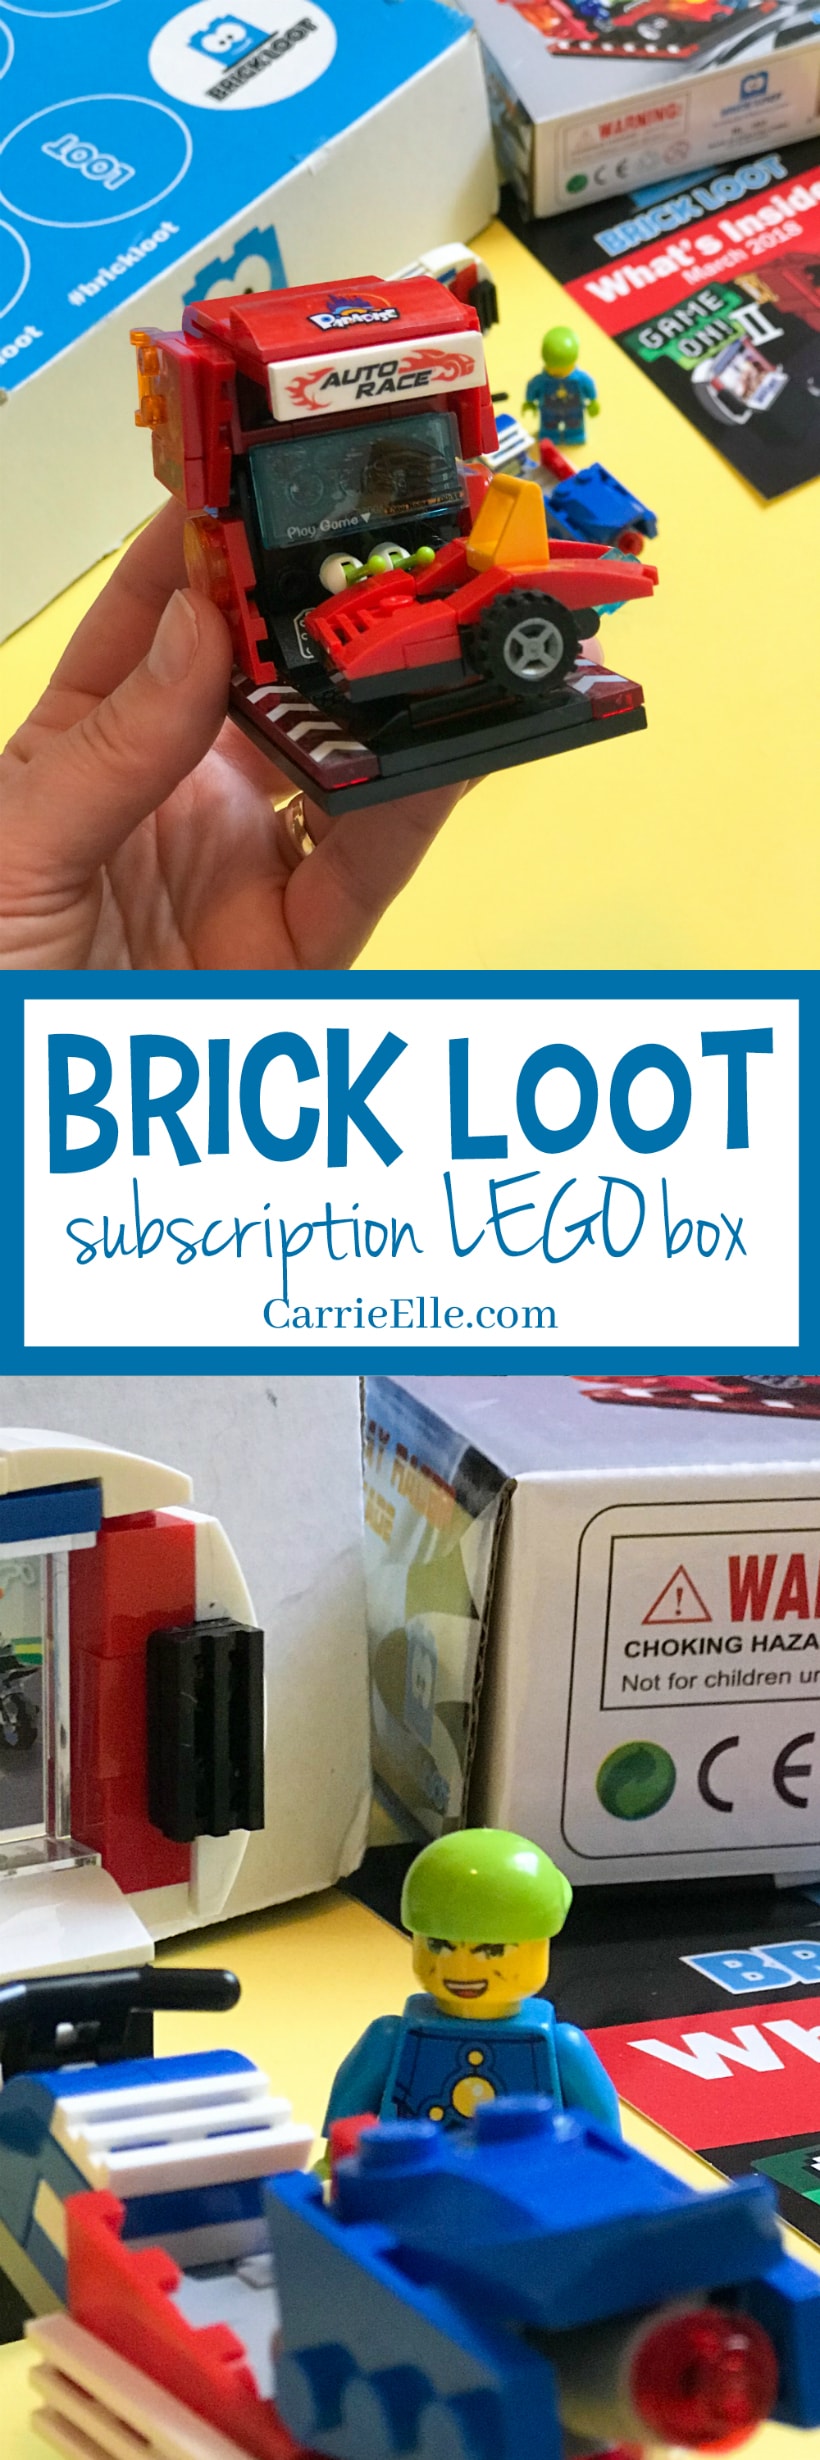 Brick Loot Subscription